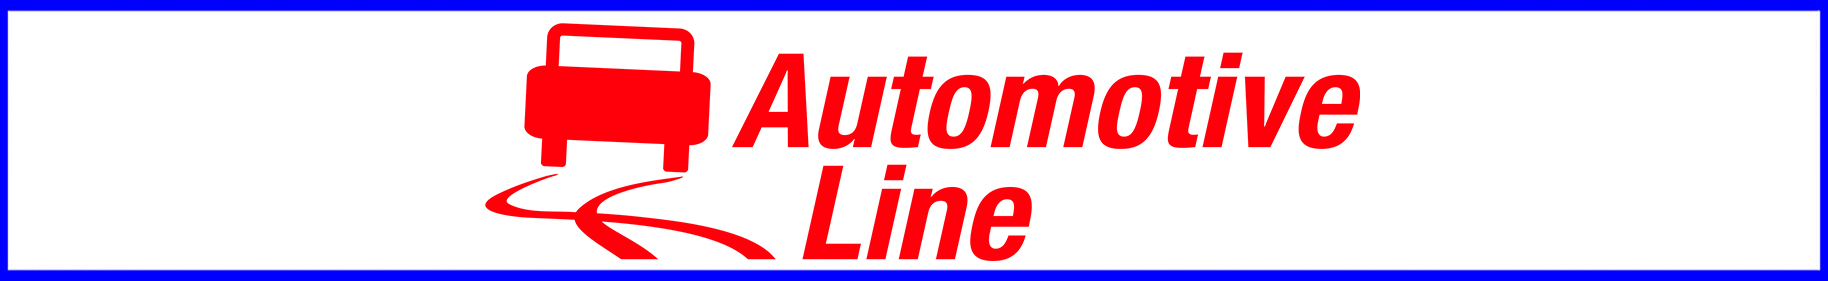 Automotive Line